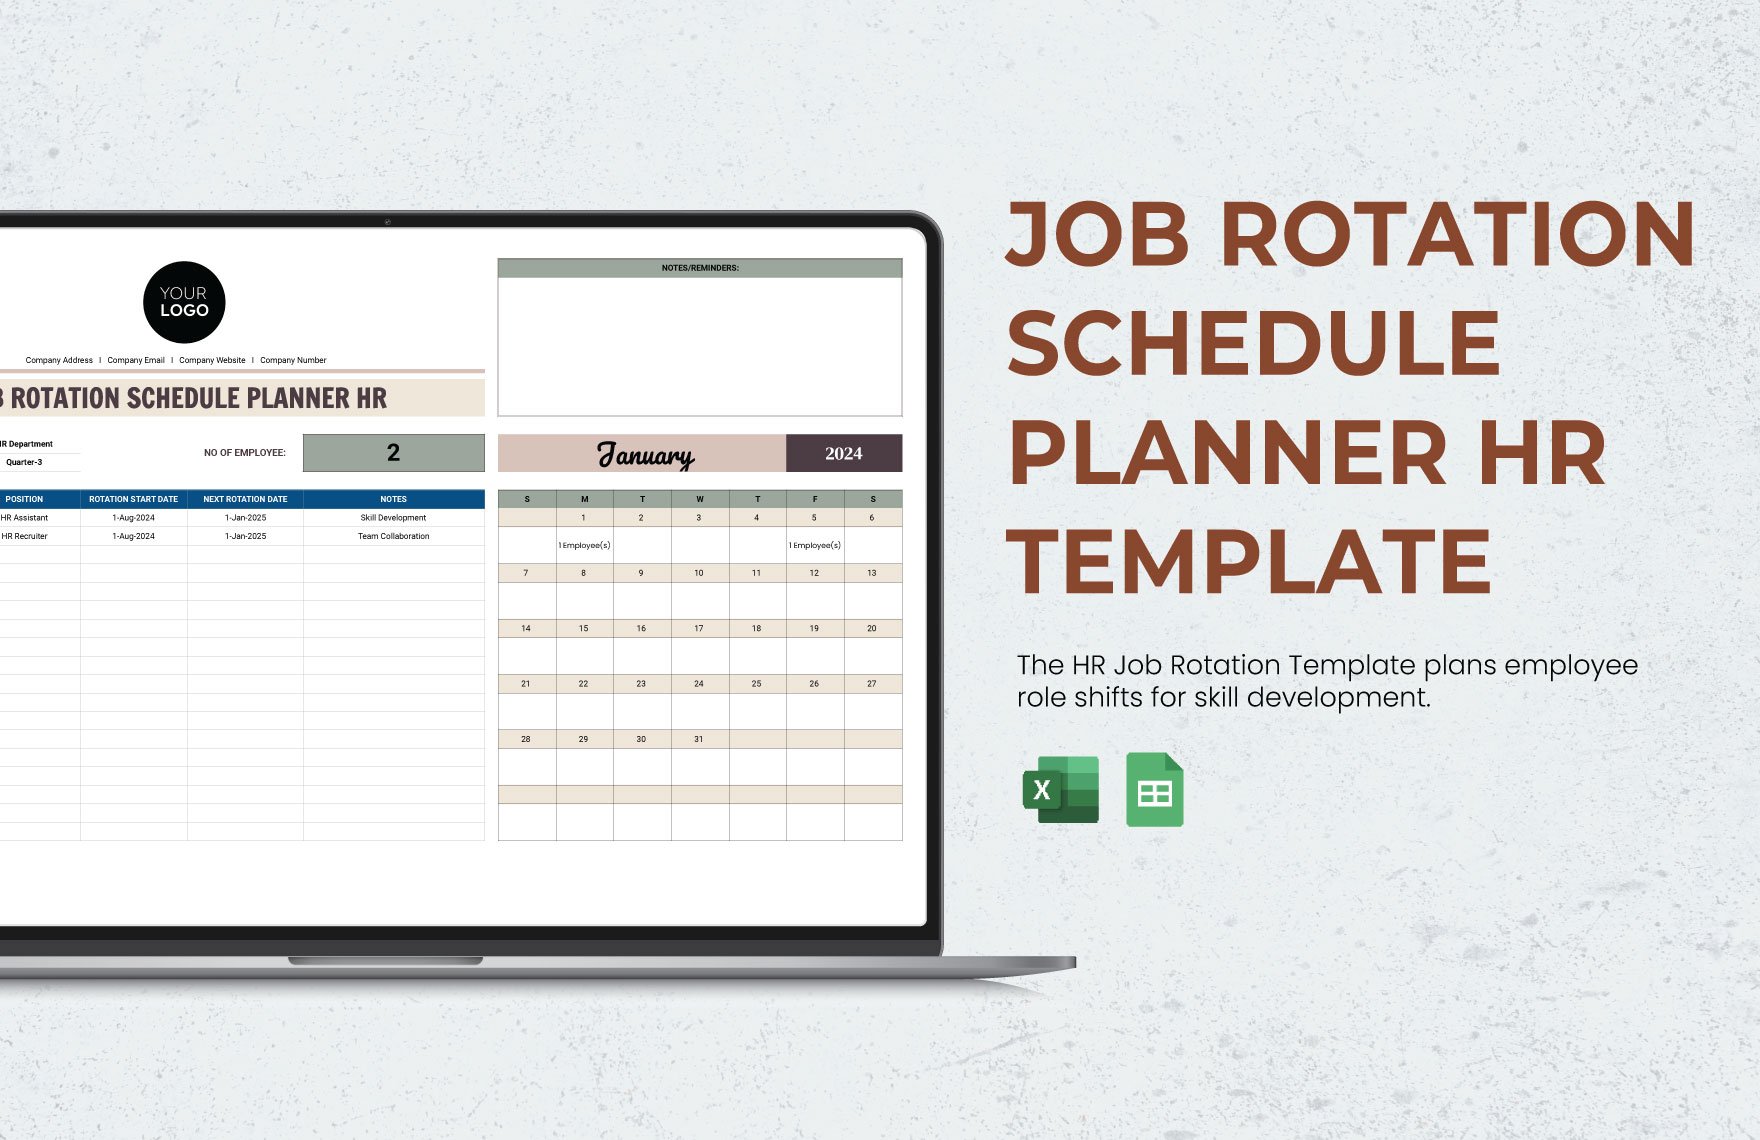 Job Rotation Schedule Planner HR Template